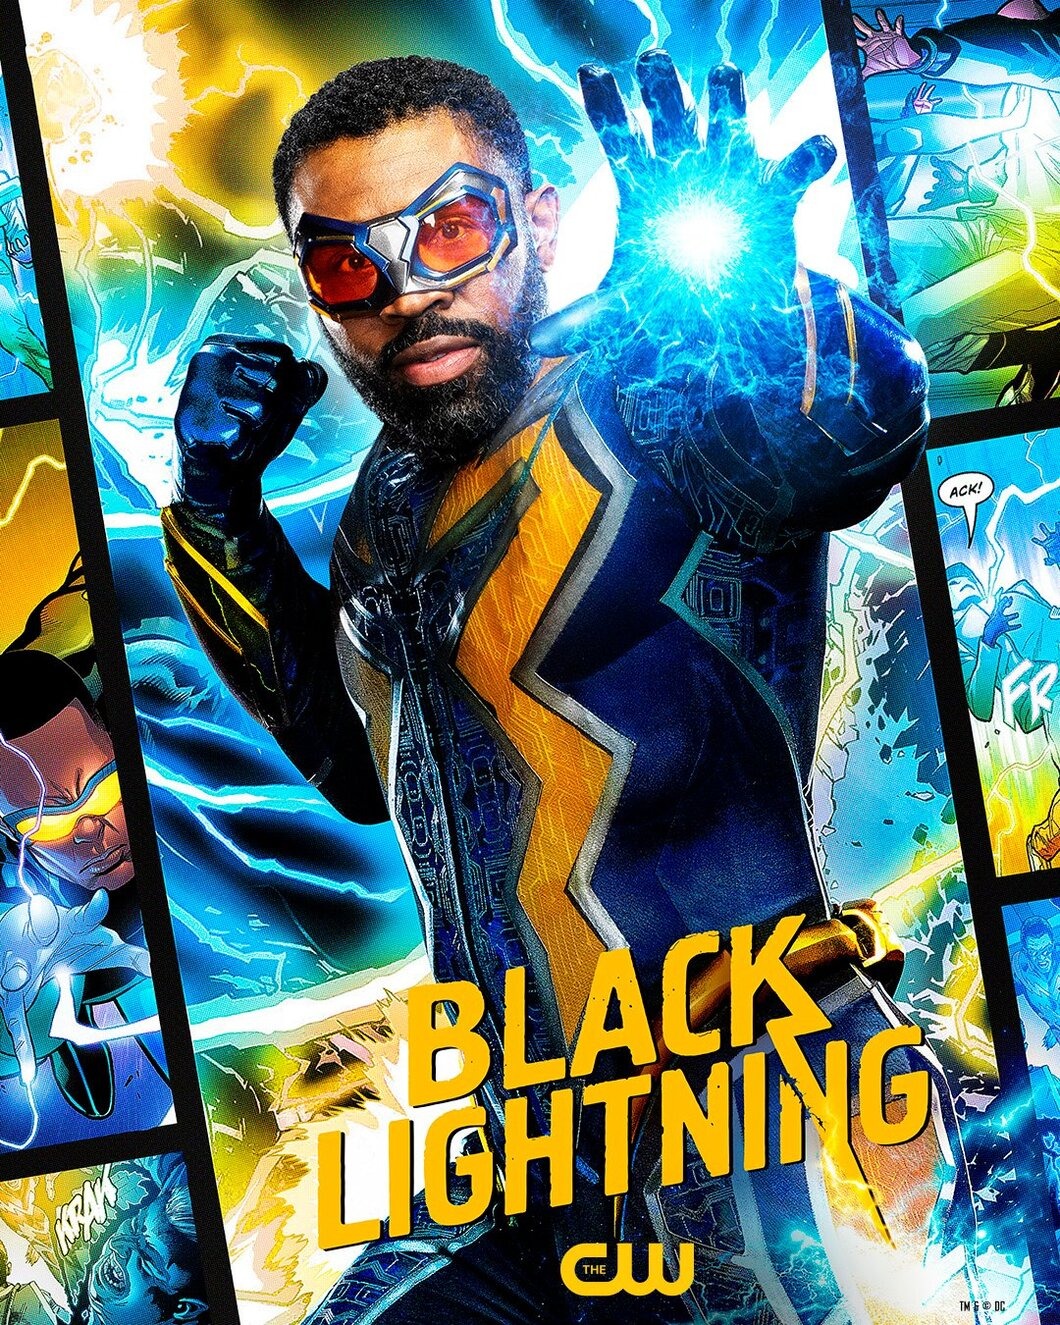 Extra Large TV Poster Image for Black Lightning (#9 of 14)